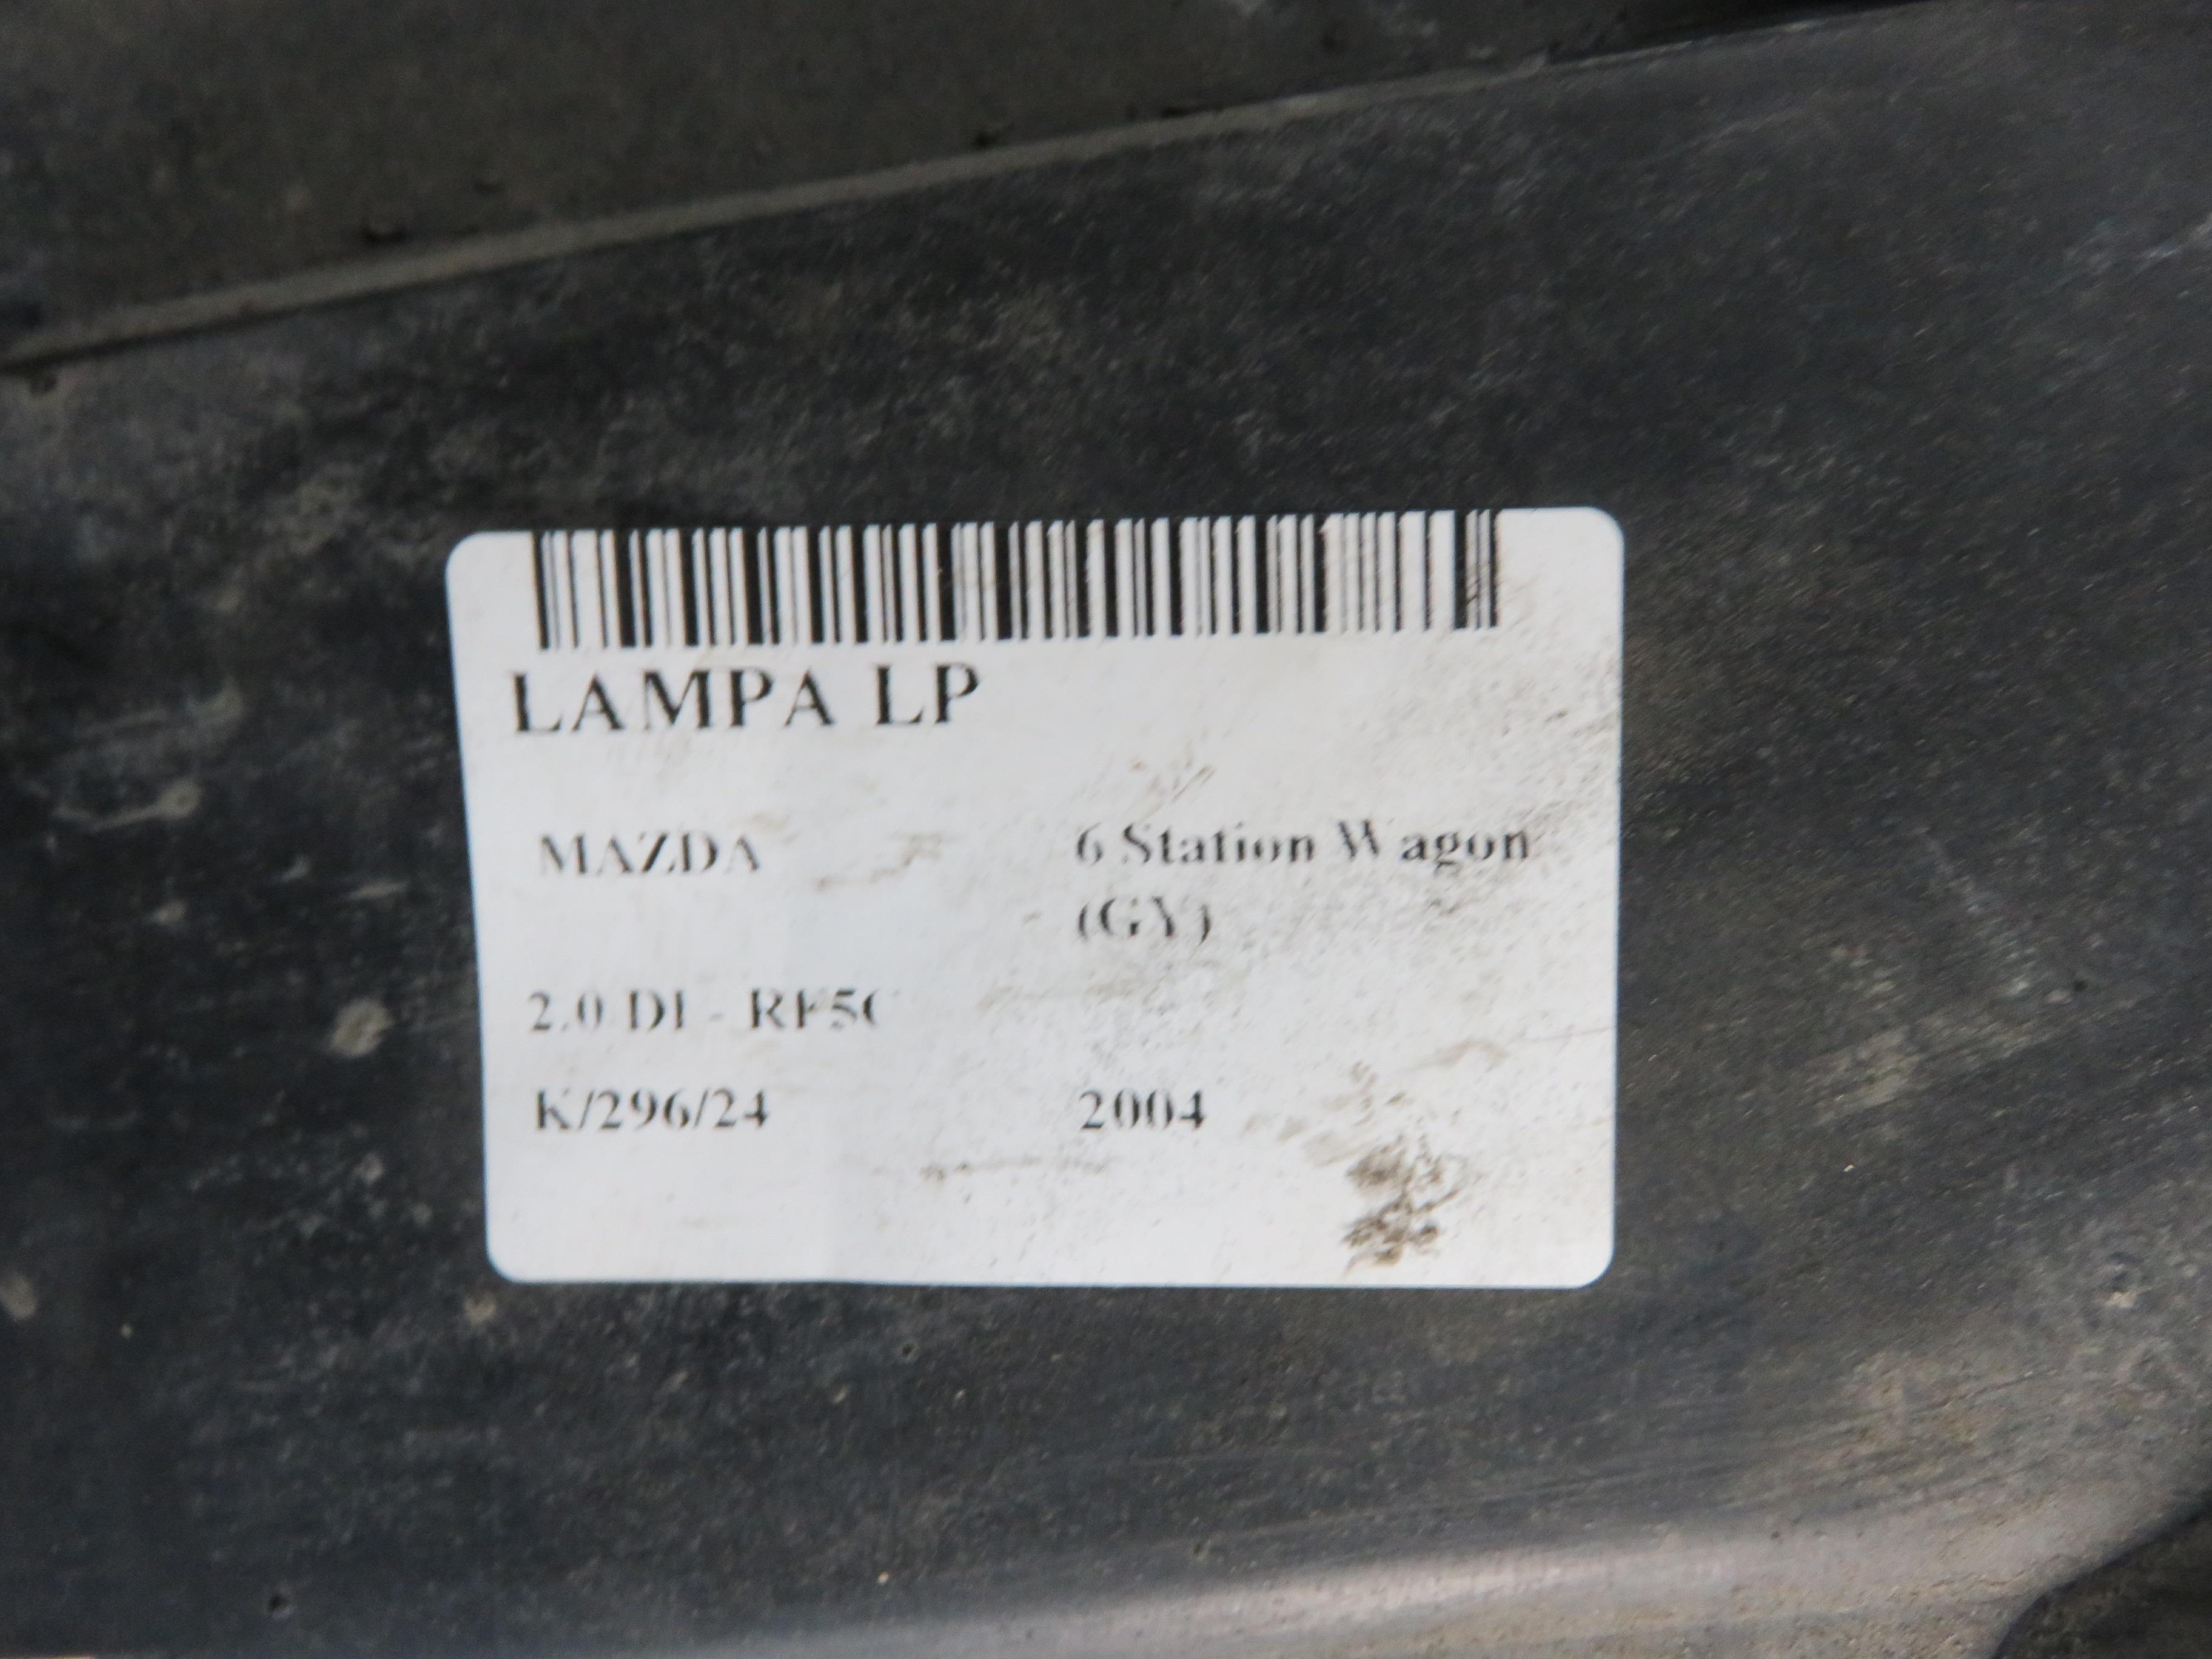 MAZDA 6 GG (2002-2007) Front Left Headlight F014002476L, 1307329086 23983758